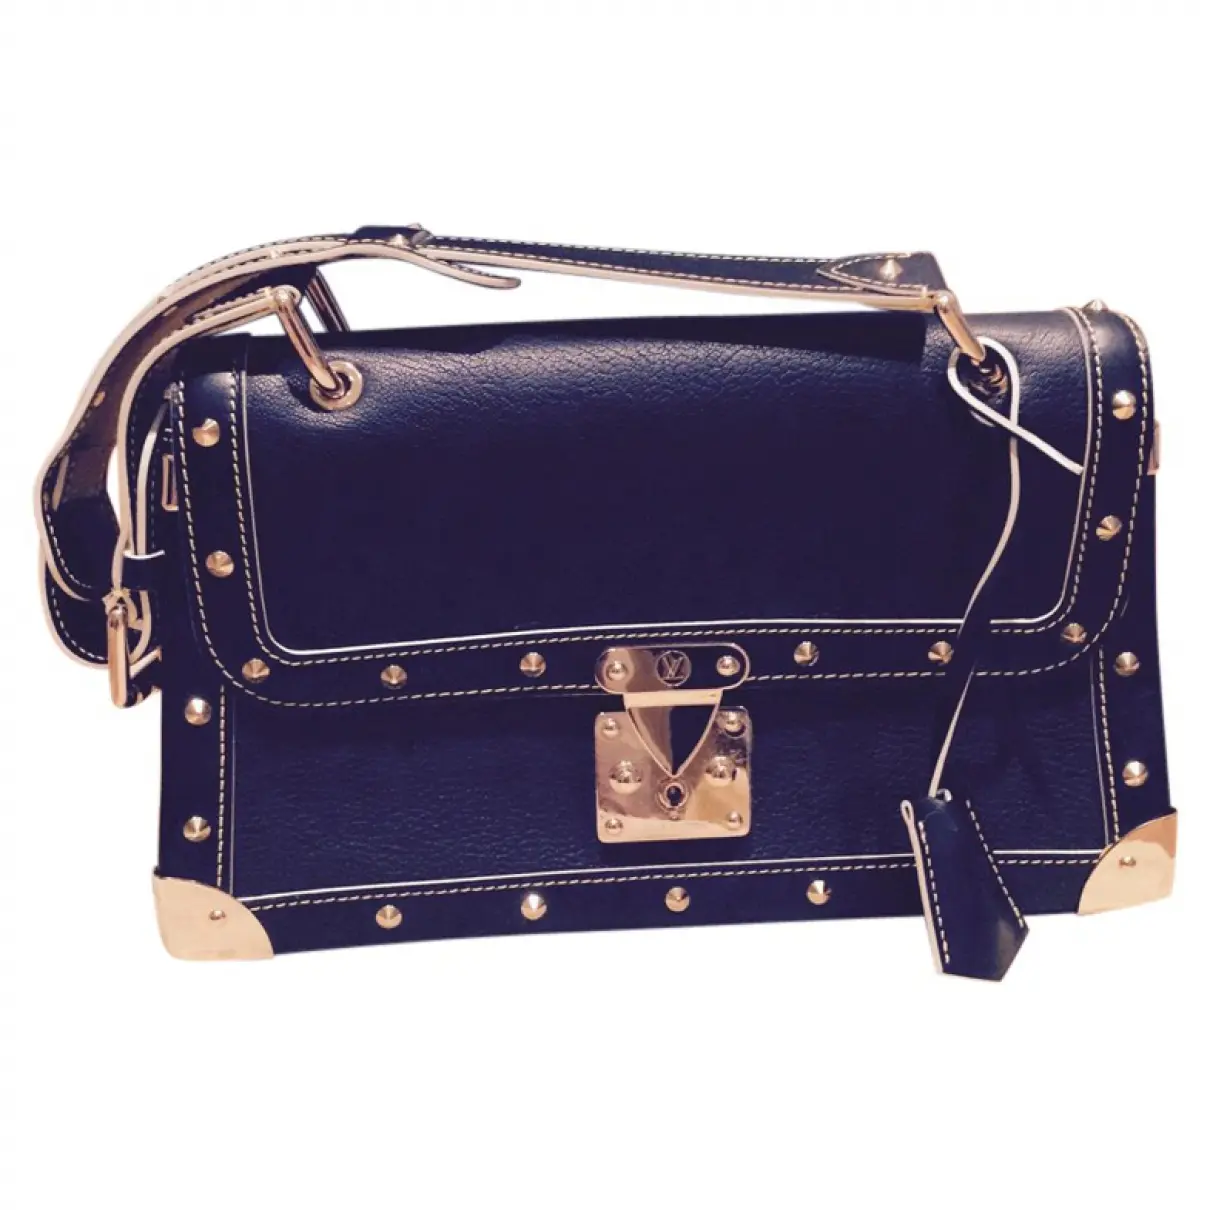 Black Leather Handbag Louis Vuitton